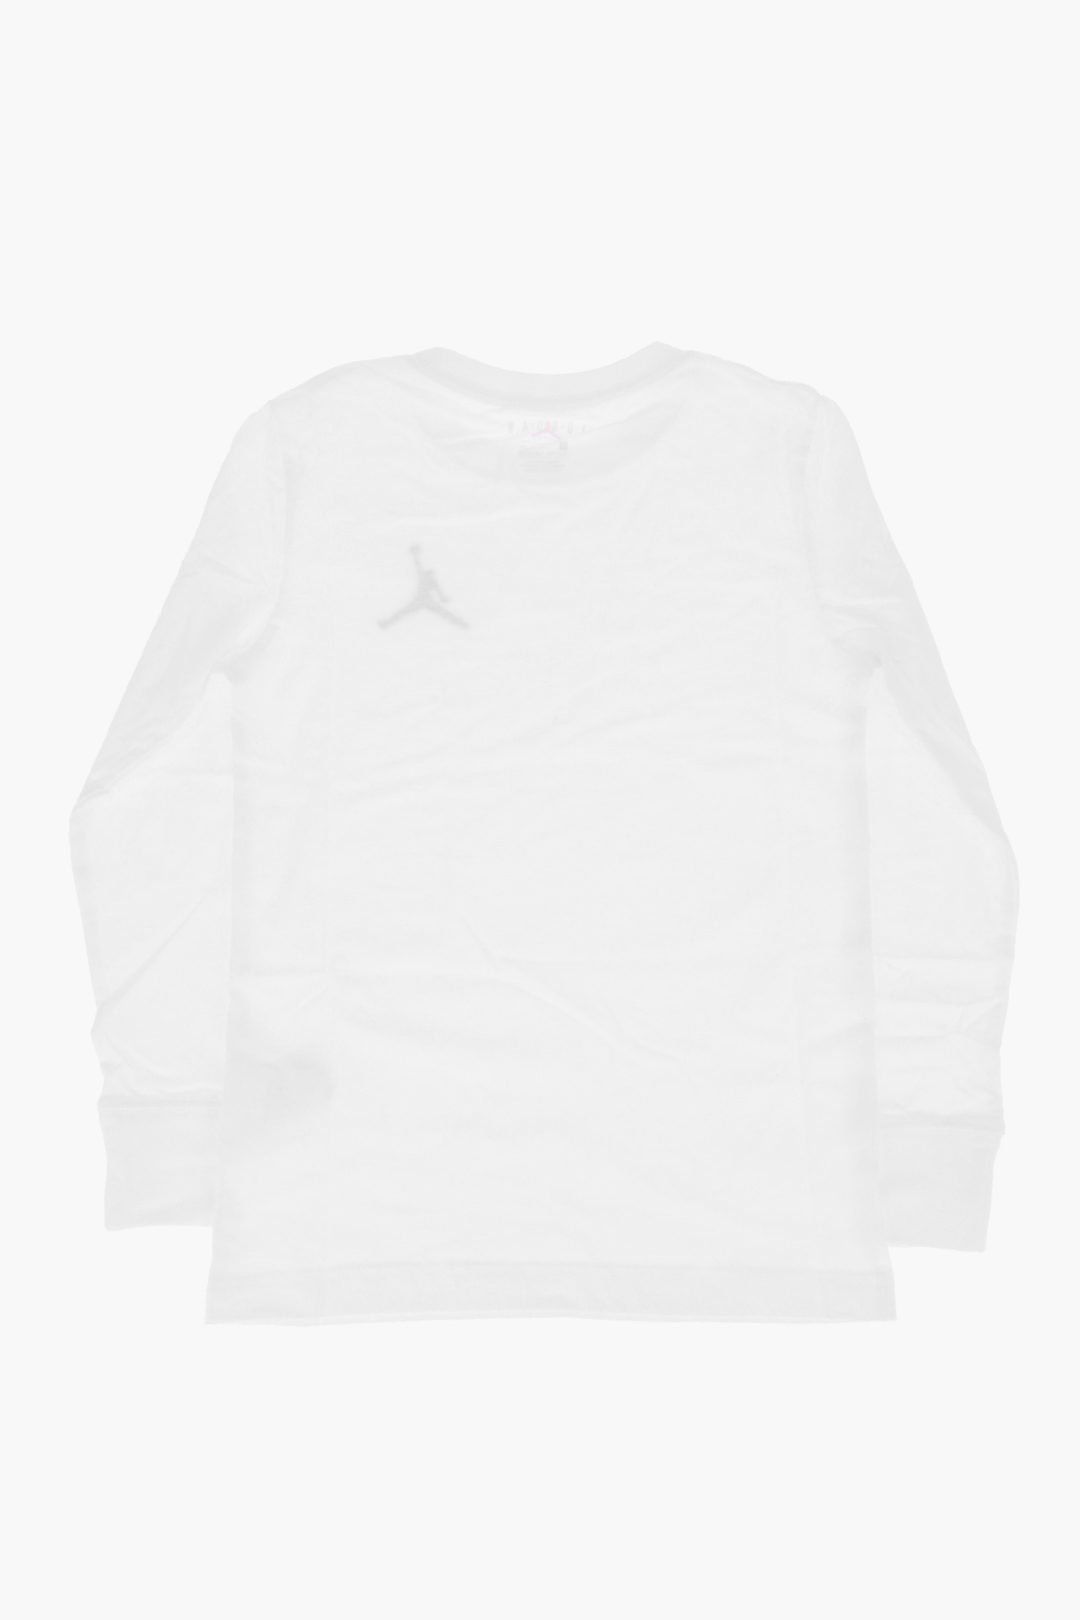 Nike KIDS AIR JORDAN cotton long sleeve JUMPMAN t-shirt boys - Glamood  Outlet